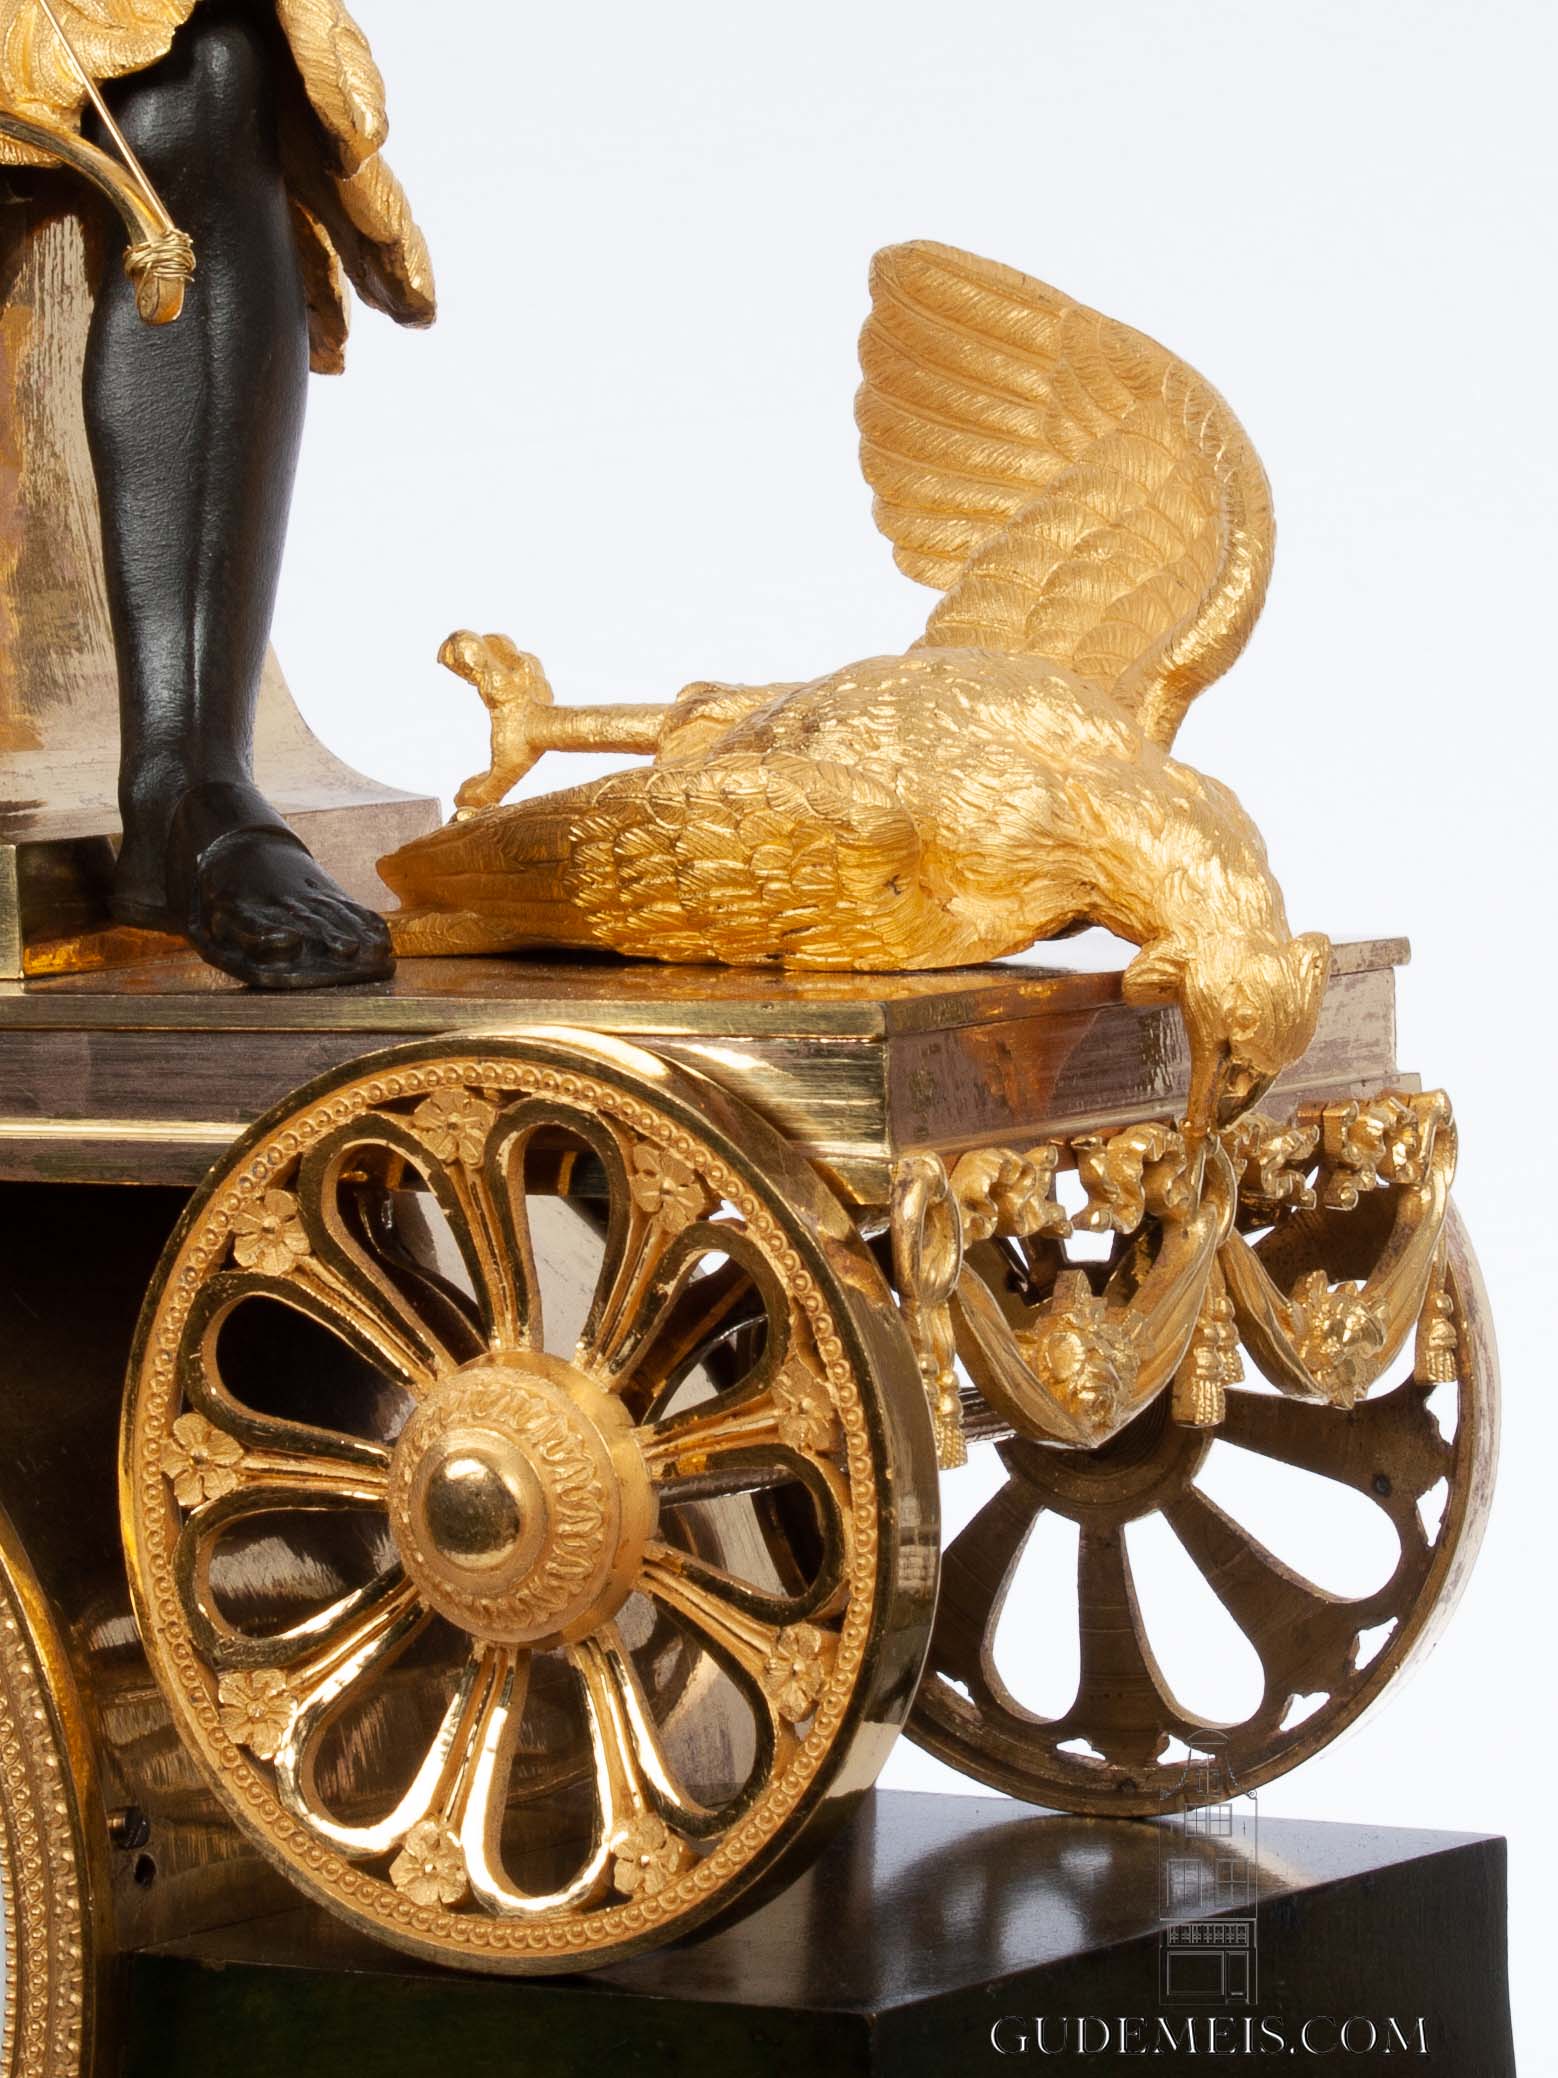 French-directoire-empire-patinated-bronze-ormolu-bon-sauvage-striking-mantel-antique-clock-Le-chasseur-amérindien